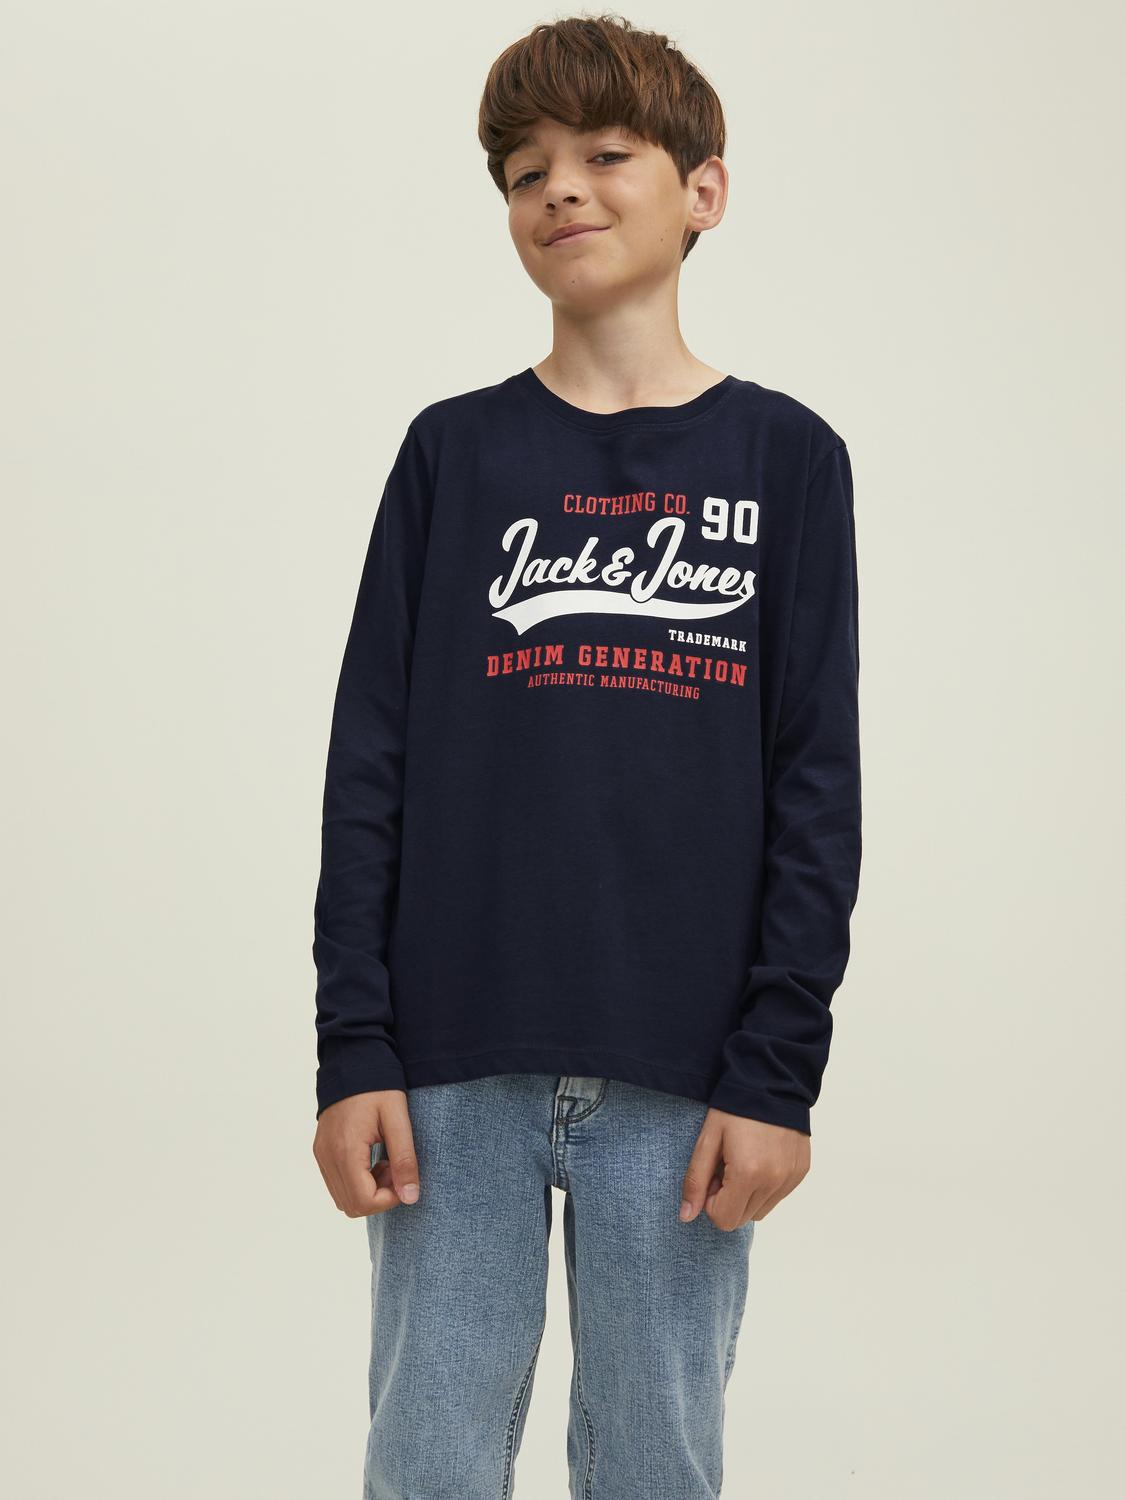 Jack & Jones Printed T-shirt Mini -Navy Blazer - 12257376